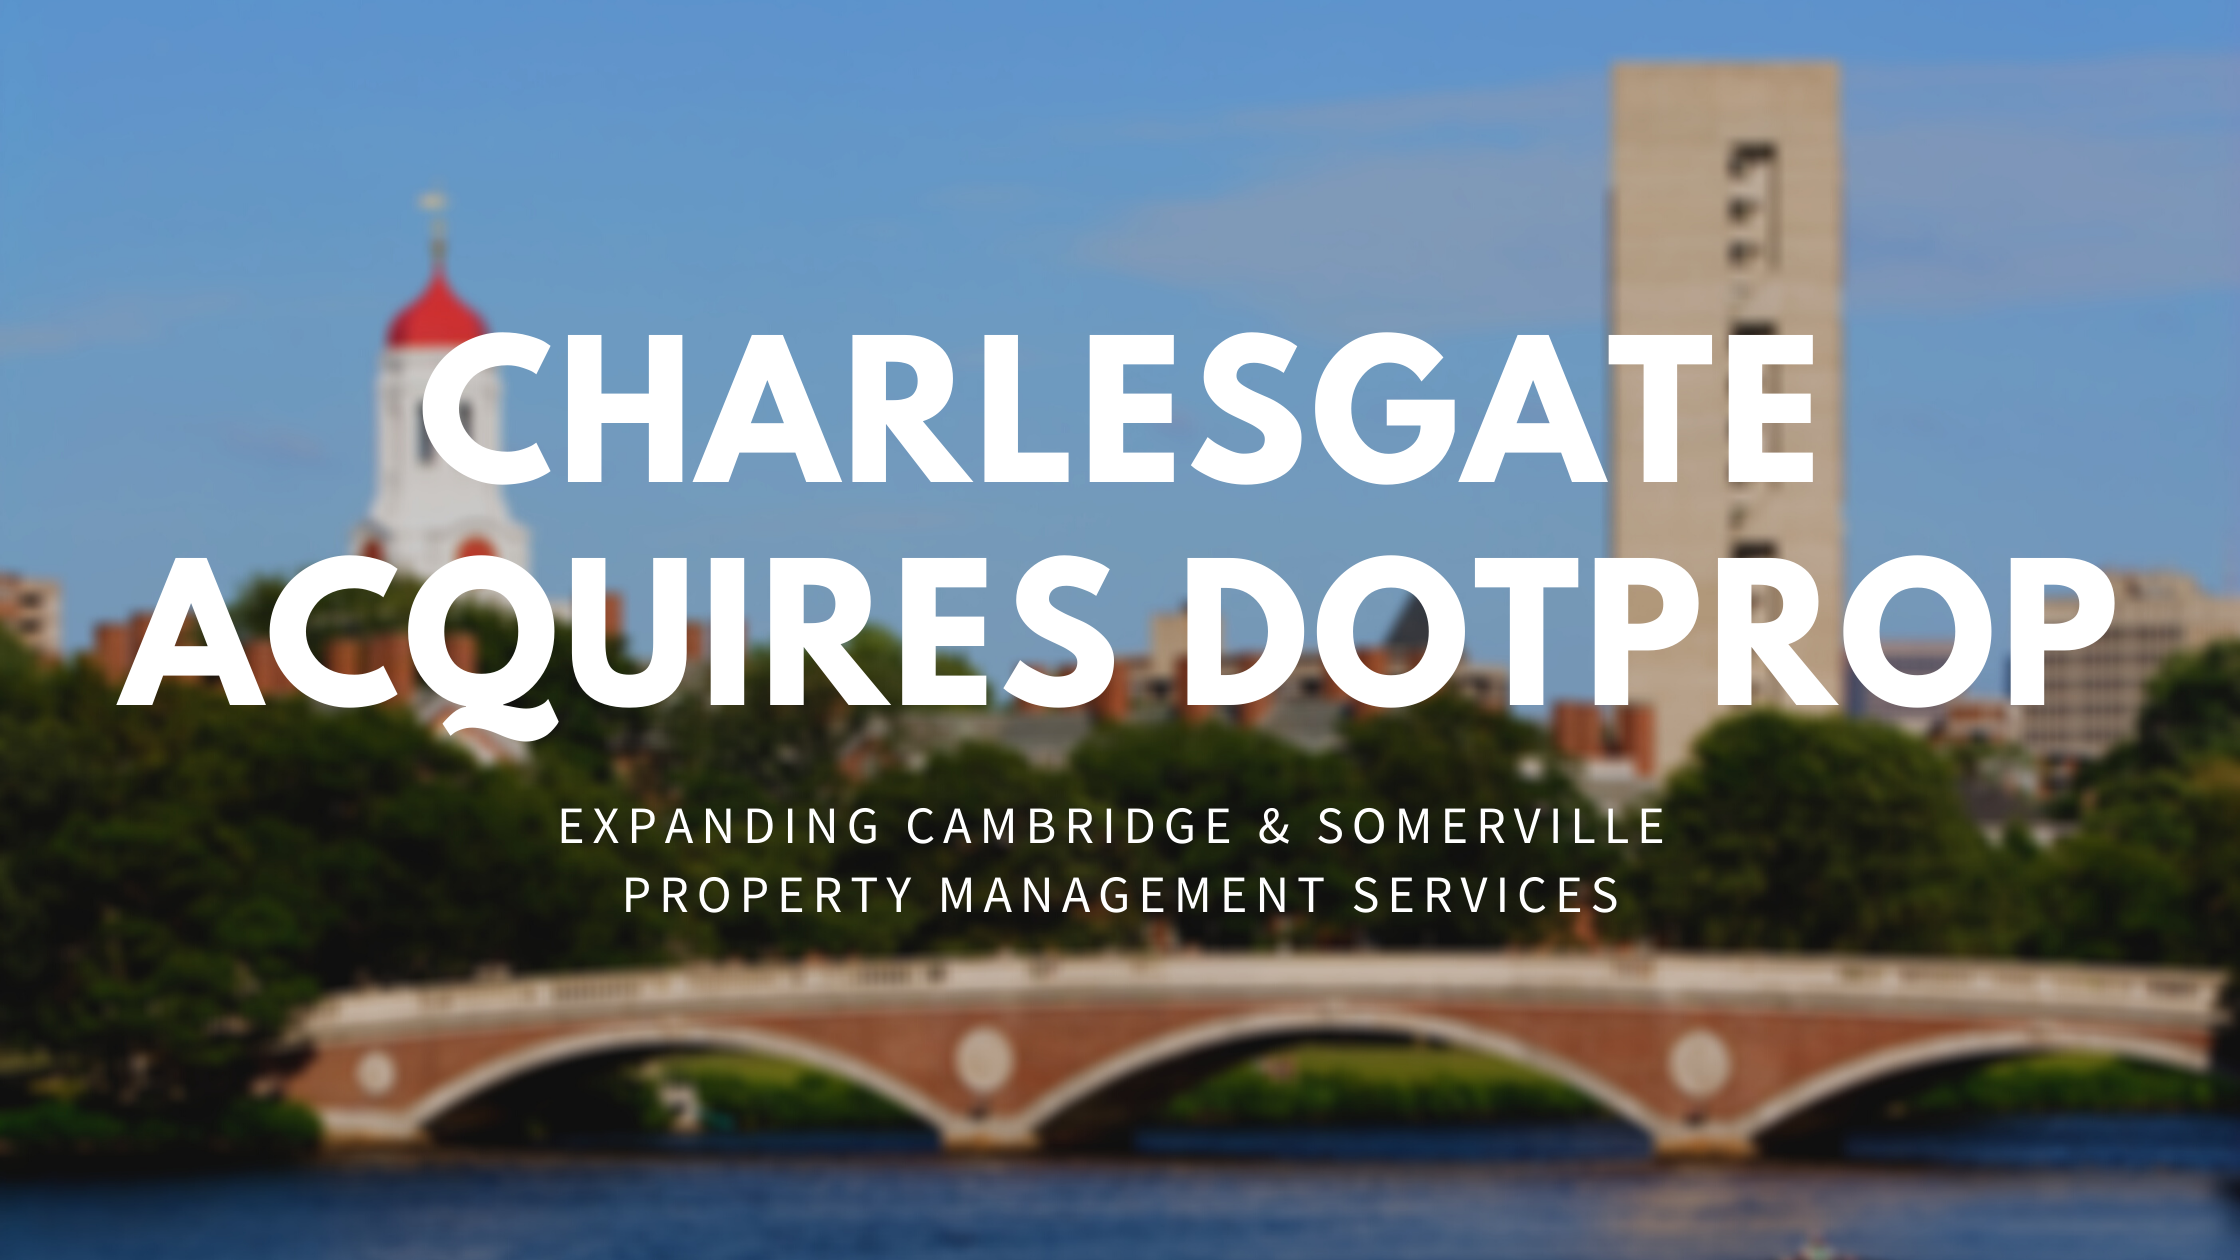 CHARLESGATE acquires dotprop Cambridge Property Management company